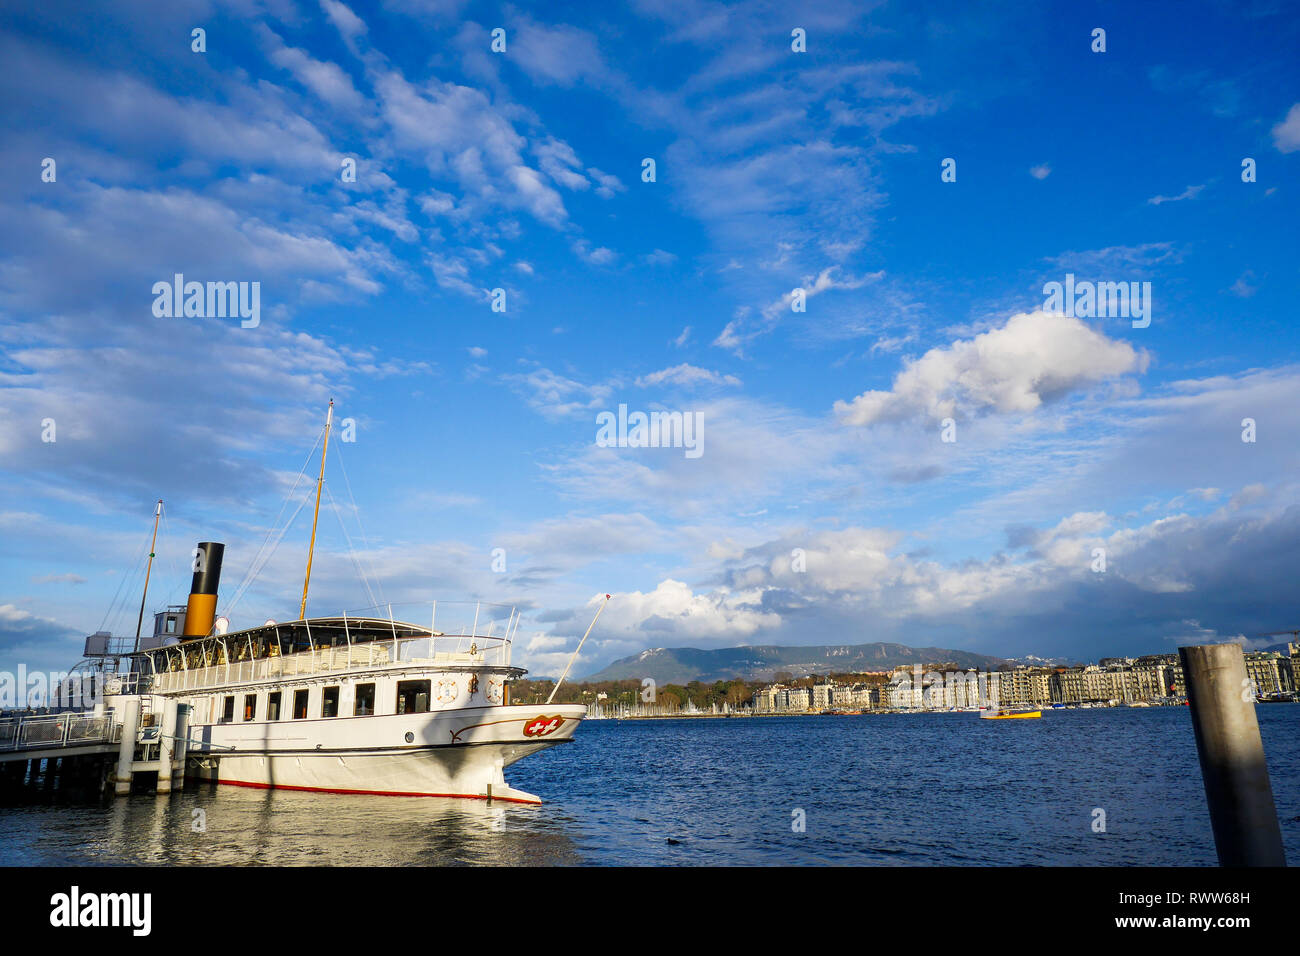 Il Rhone, swiss sternwheeler, Lago Leman, Ginevra, Svizzera Foto Stock